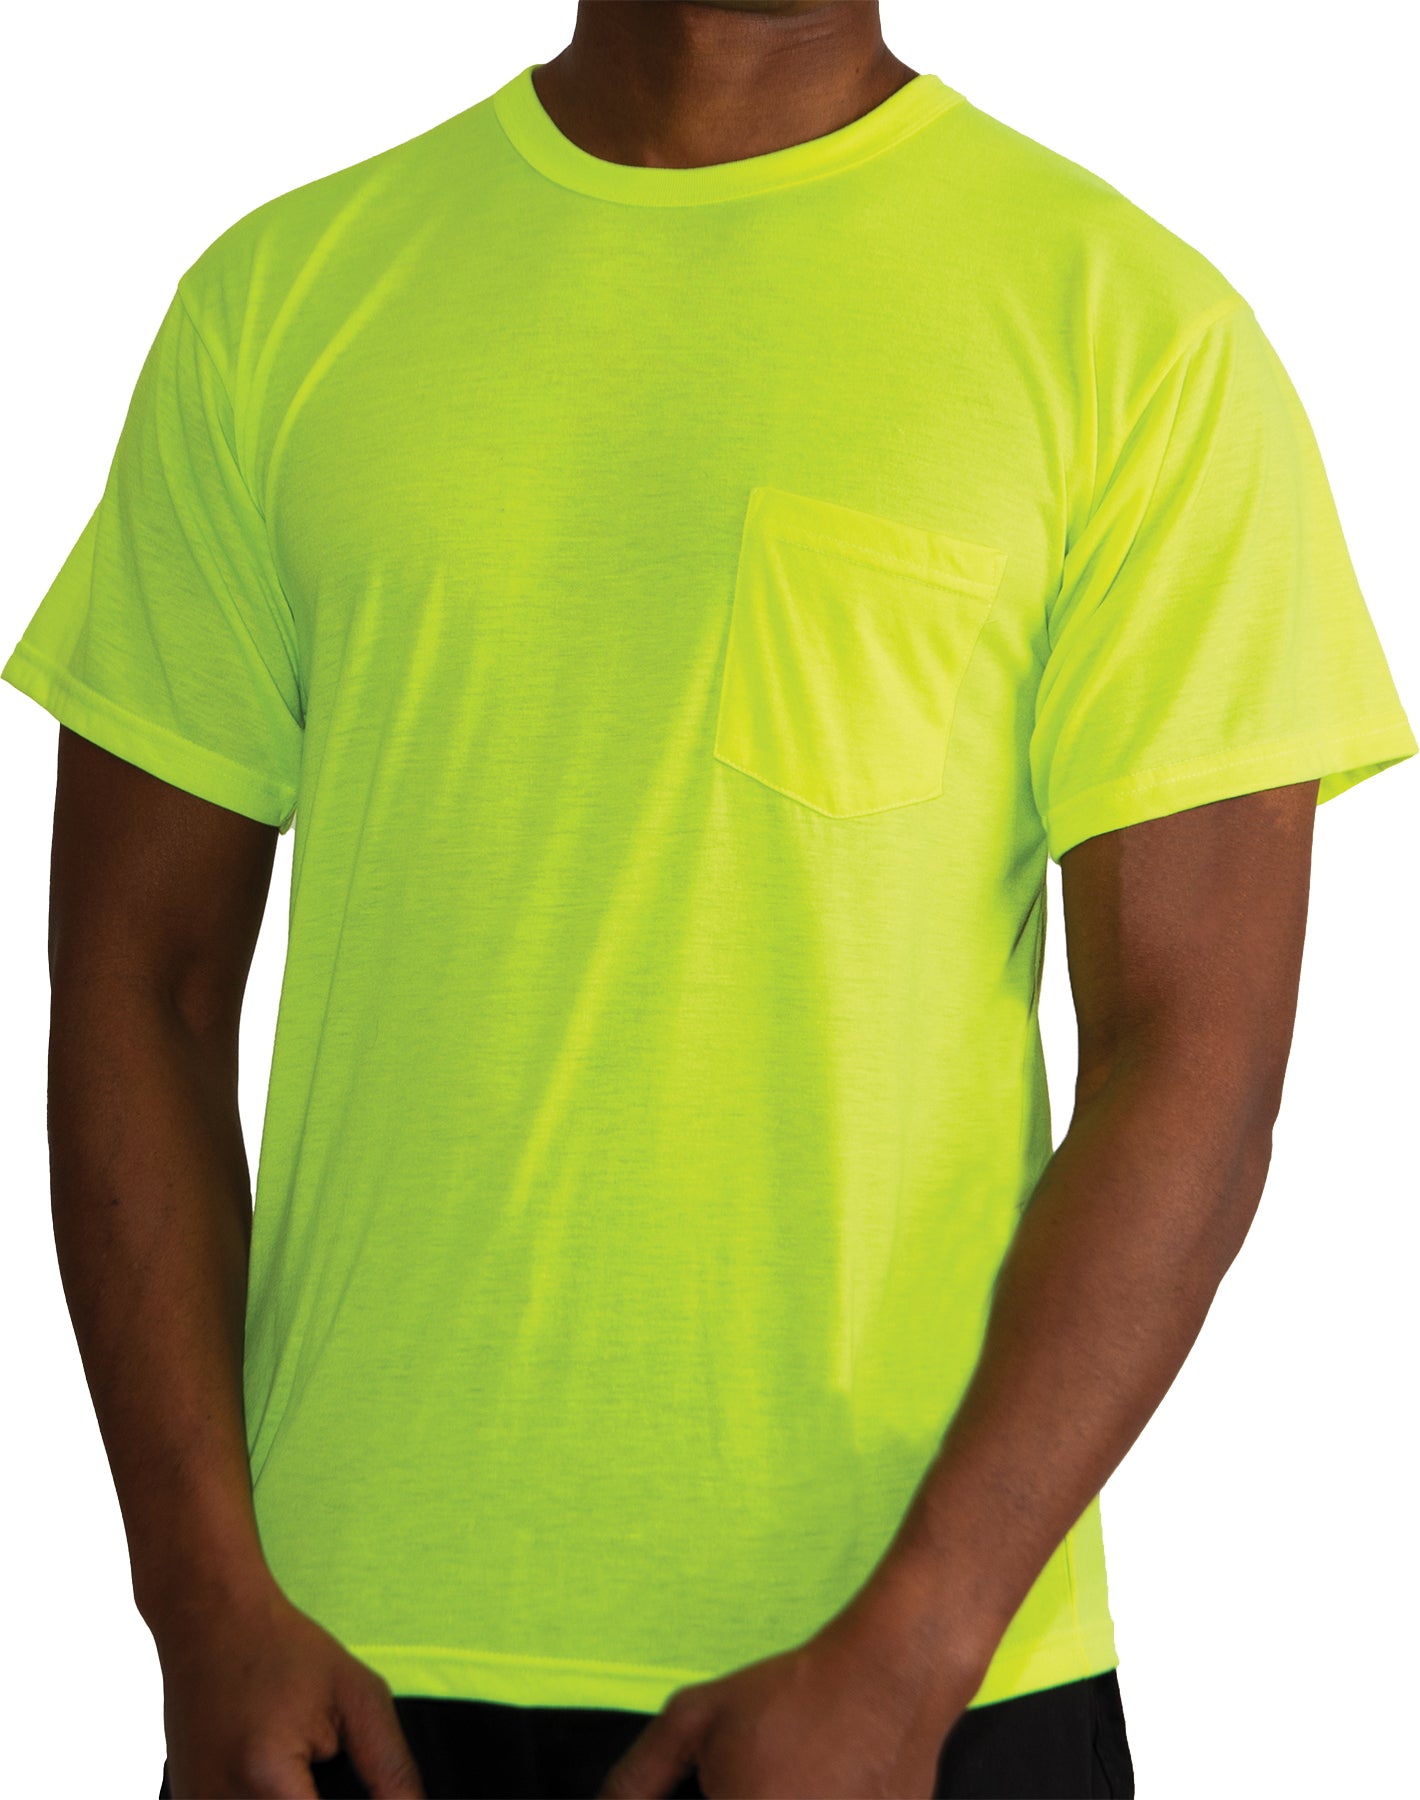 Safety Green Moisture Wicking Pocket T-Shirt Short Sleeve Performance Shirt